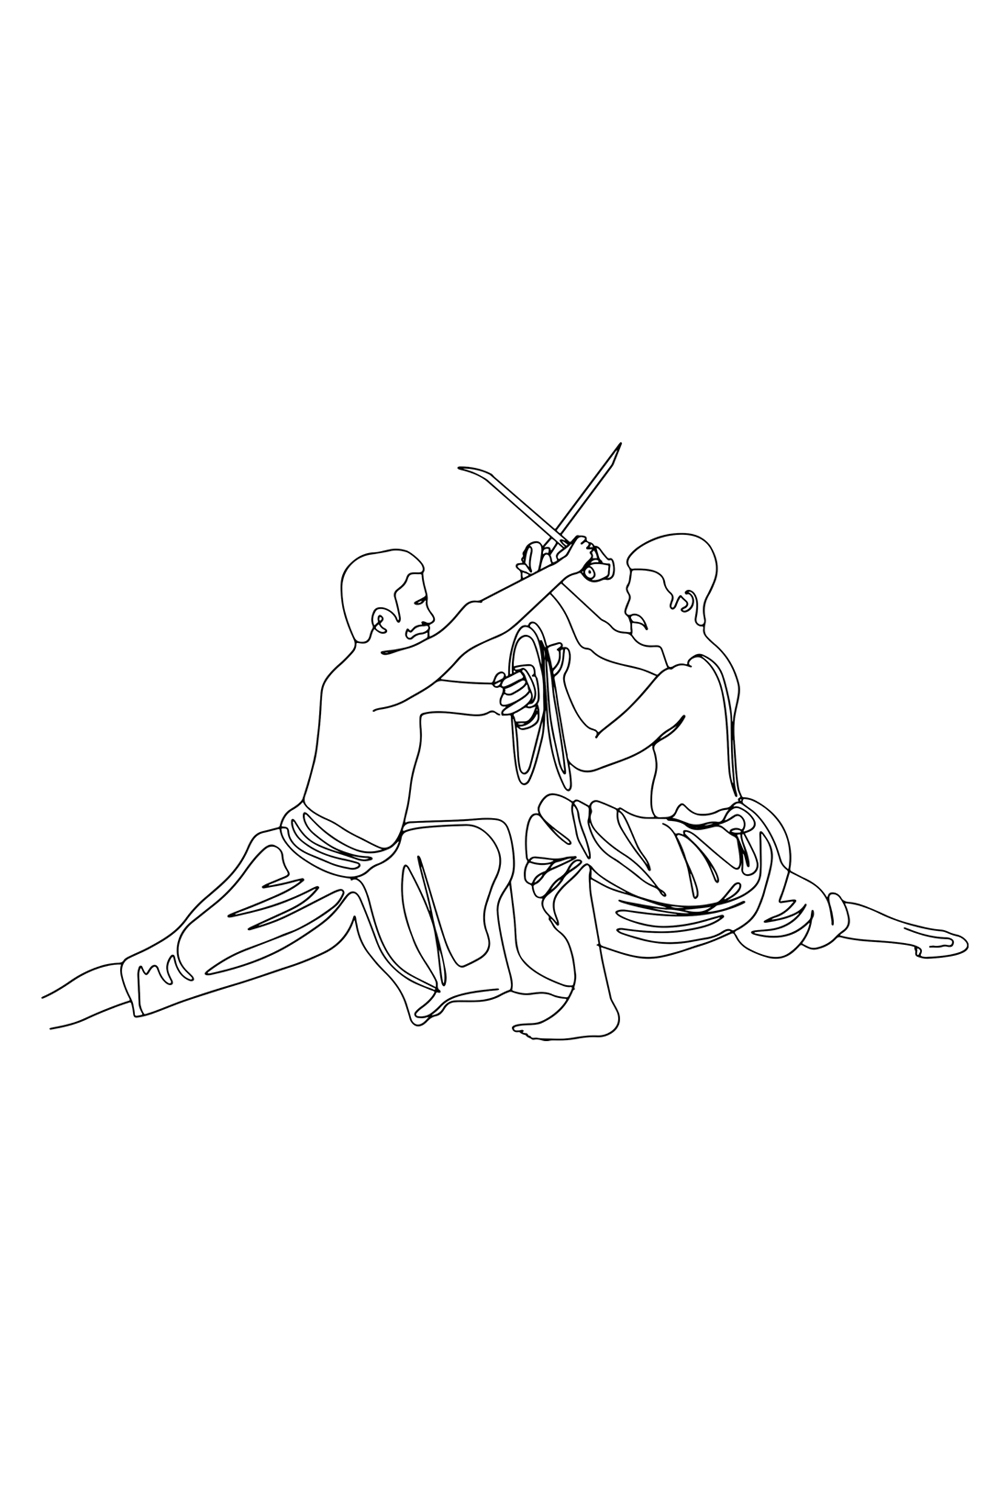 Indian Martial Arts Cartoon: Kalarippayat Warriors in One Line, Epic Battle Scene: Kalarippayat Swords and Shields Illustration, Kalarippayat Warriors Sketch pinterest preview image.